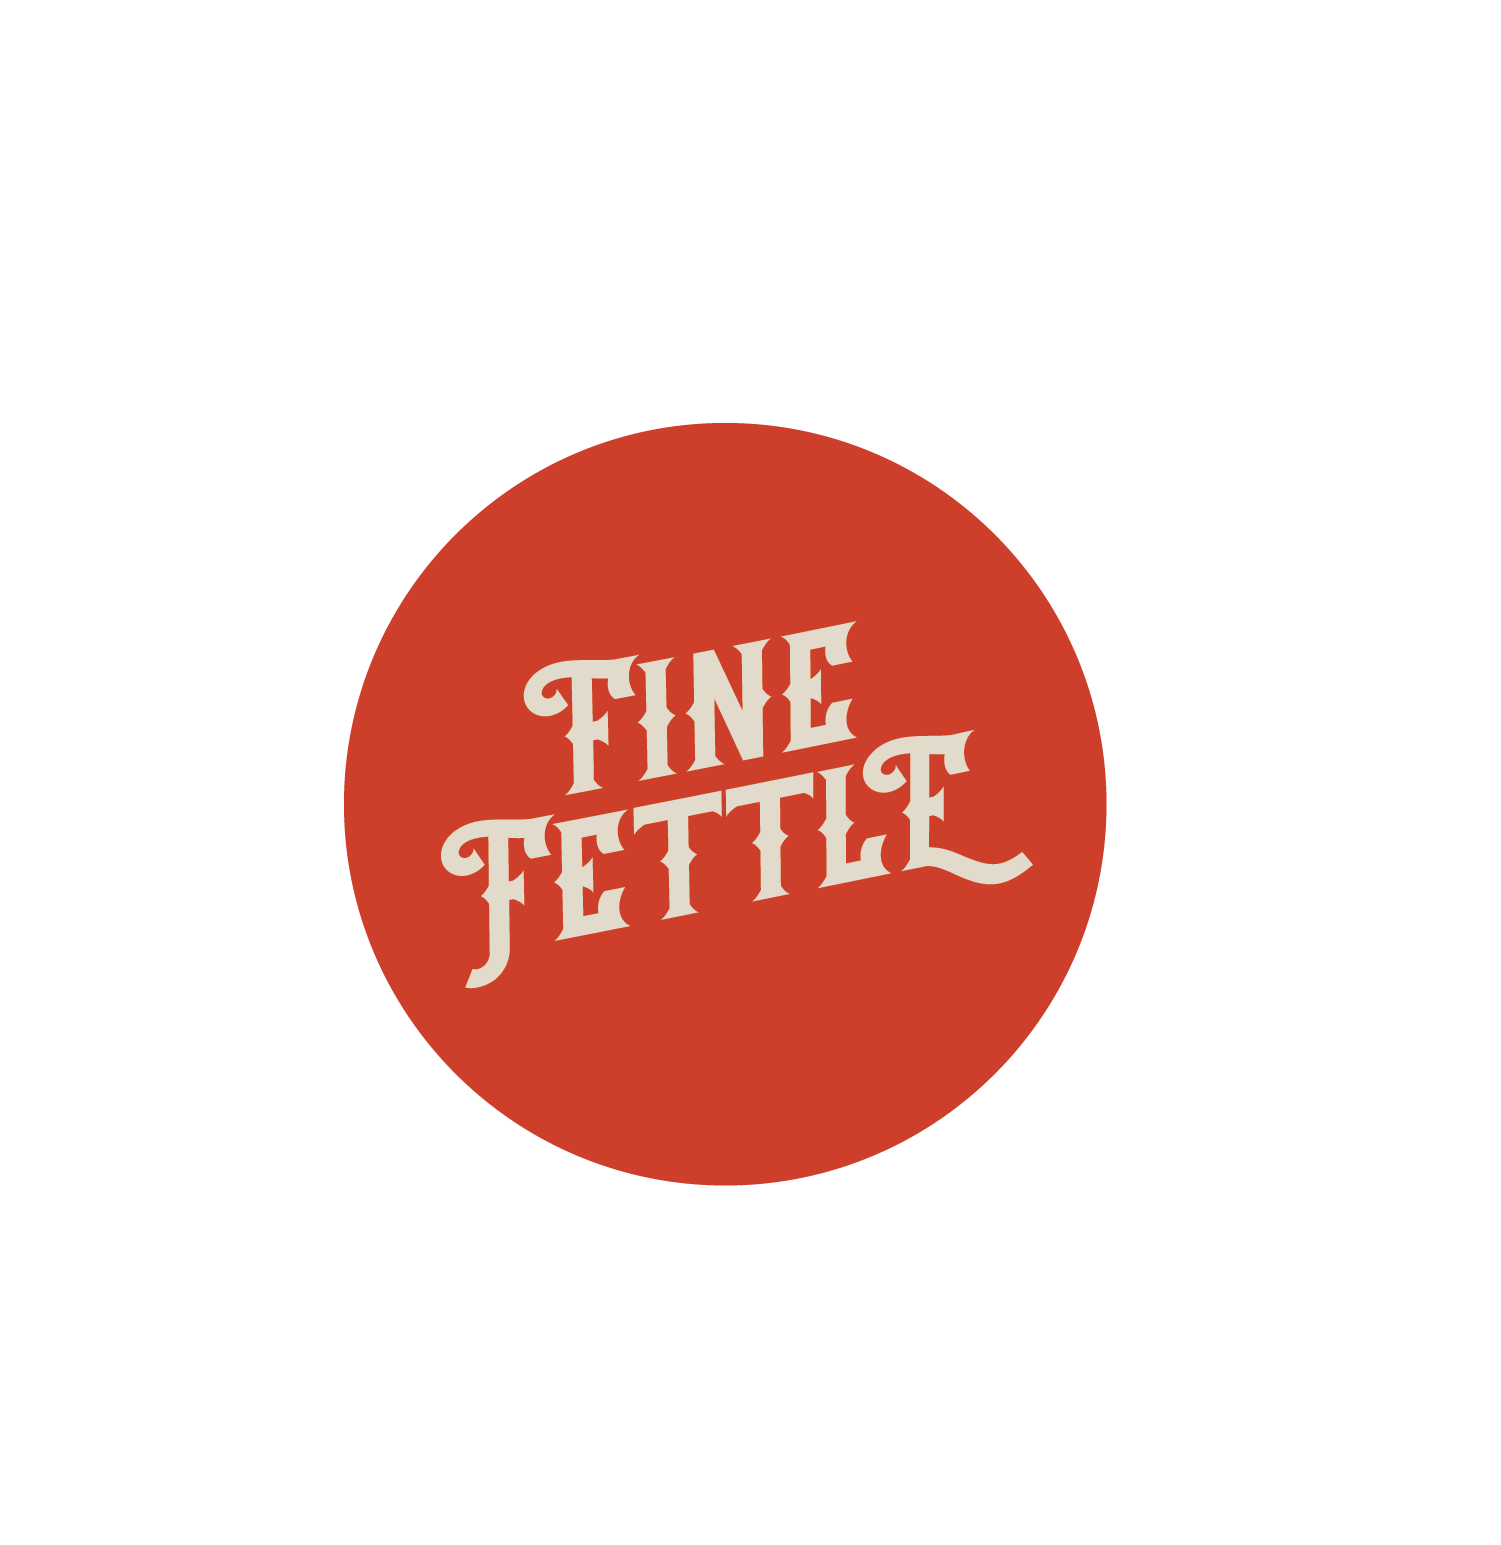 Fine Fettle - Norwalk logo